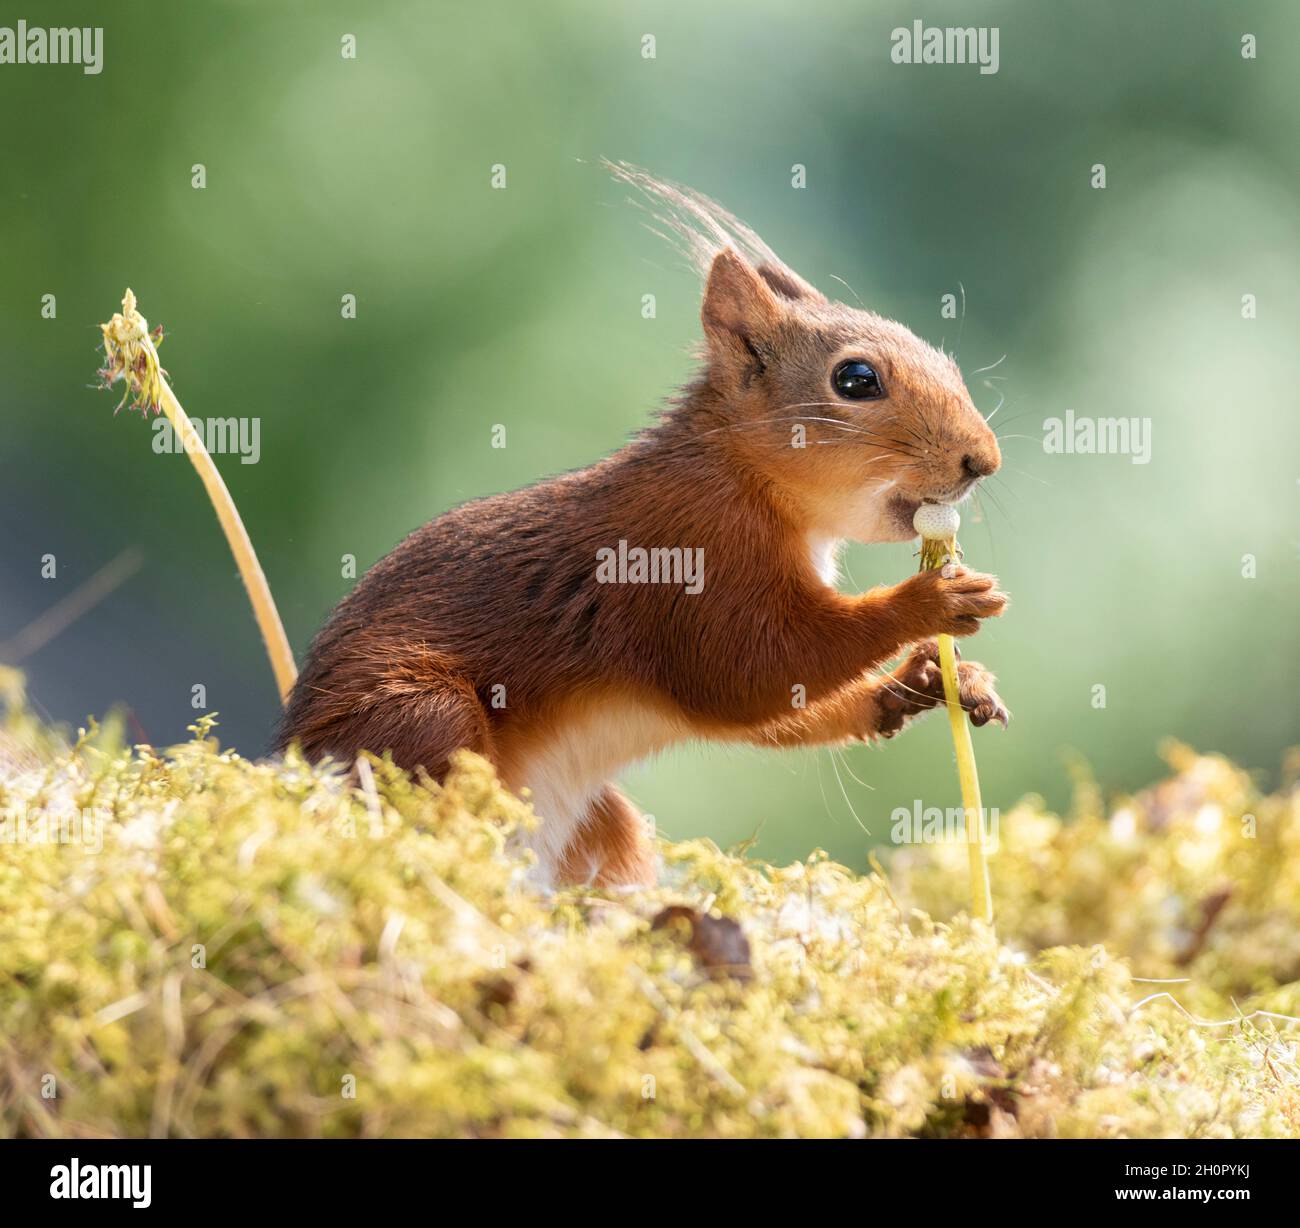 Eekhoorn; Red Squirrel; Sciurus vulgaris is holding an dandelion stem with seeds Stock Photo